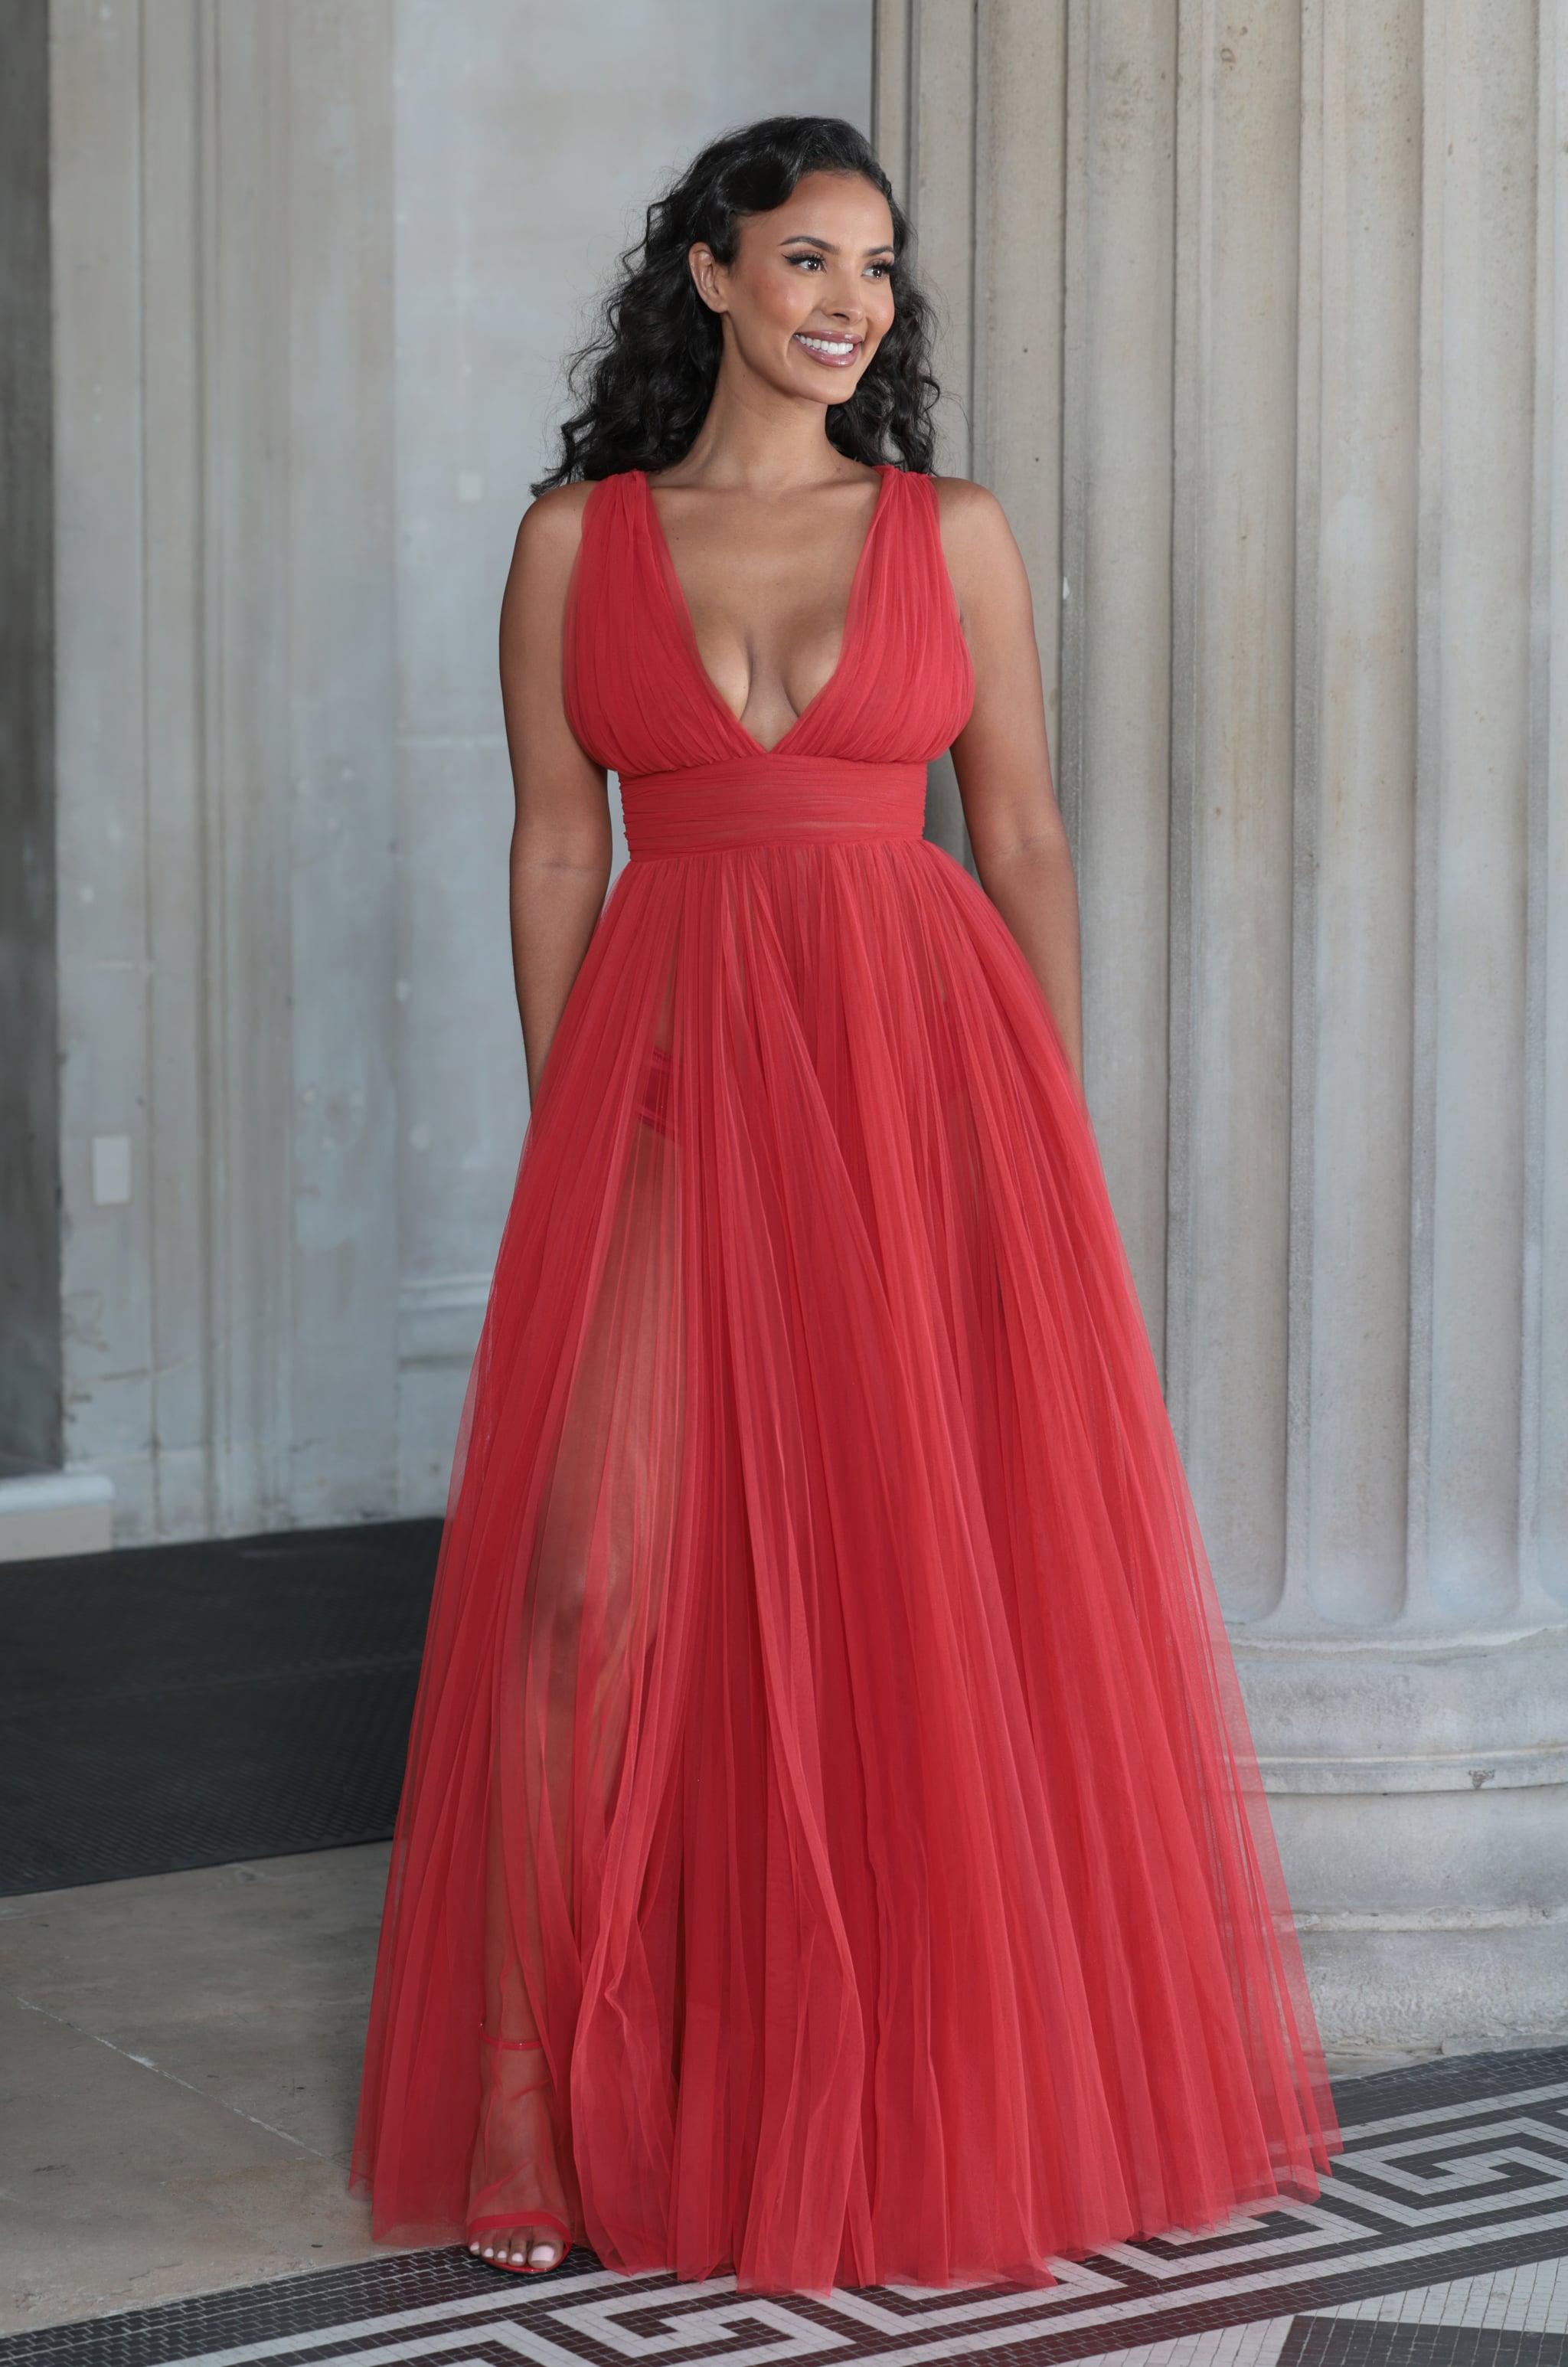 Dolce & Gabbana | Dress | Italian | The Metropolitan Museum of Art